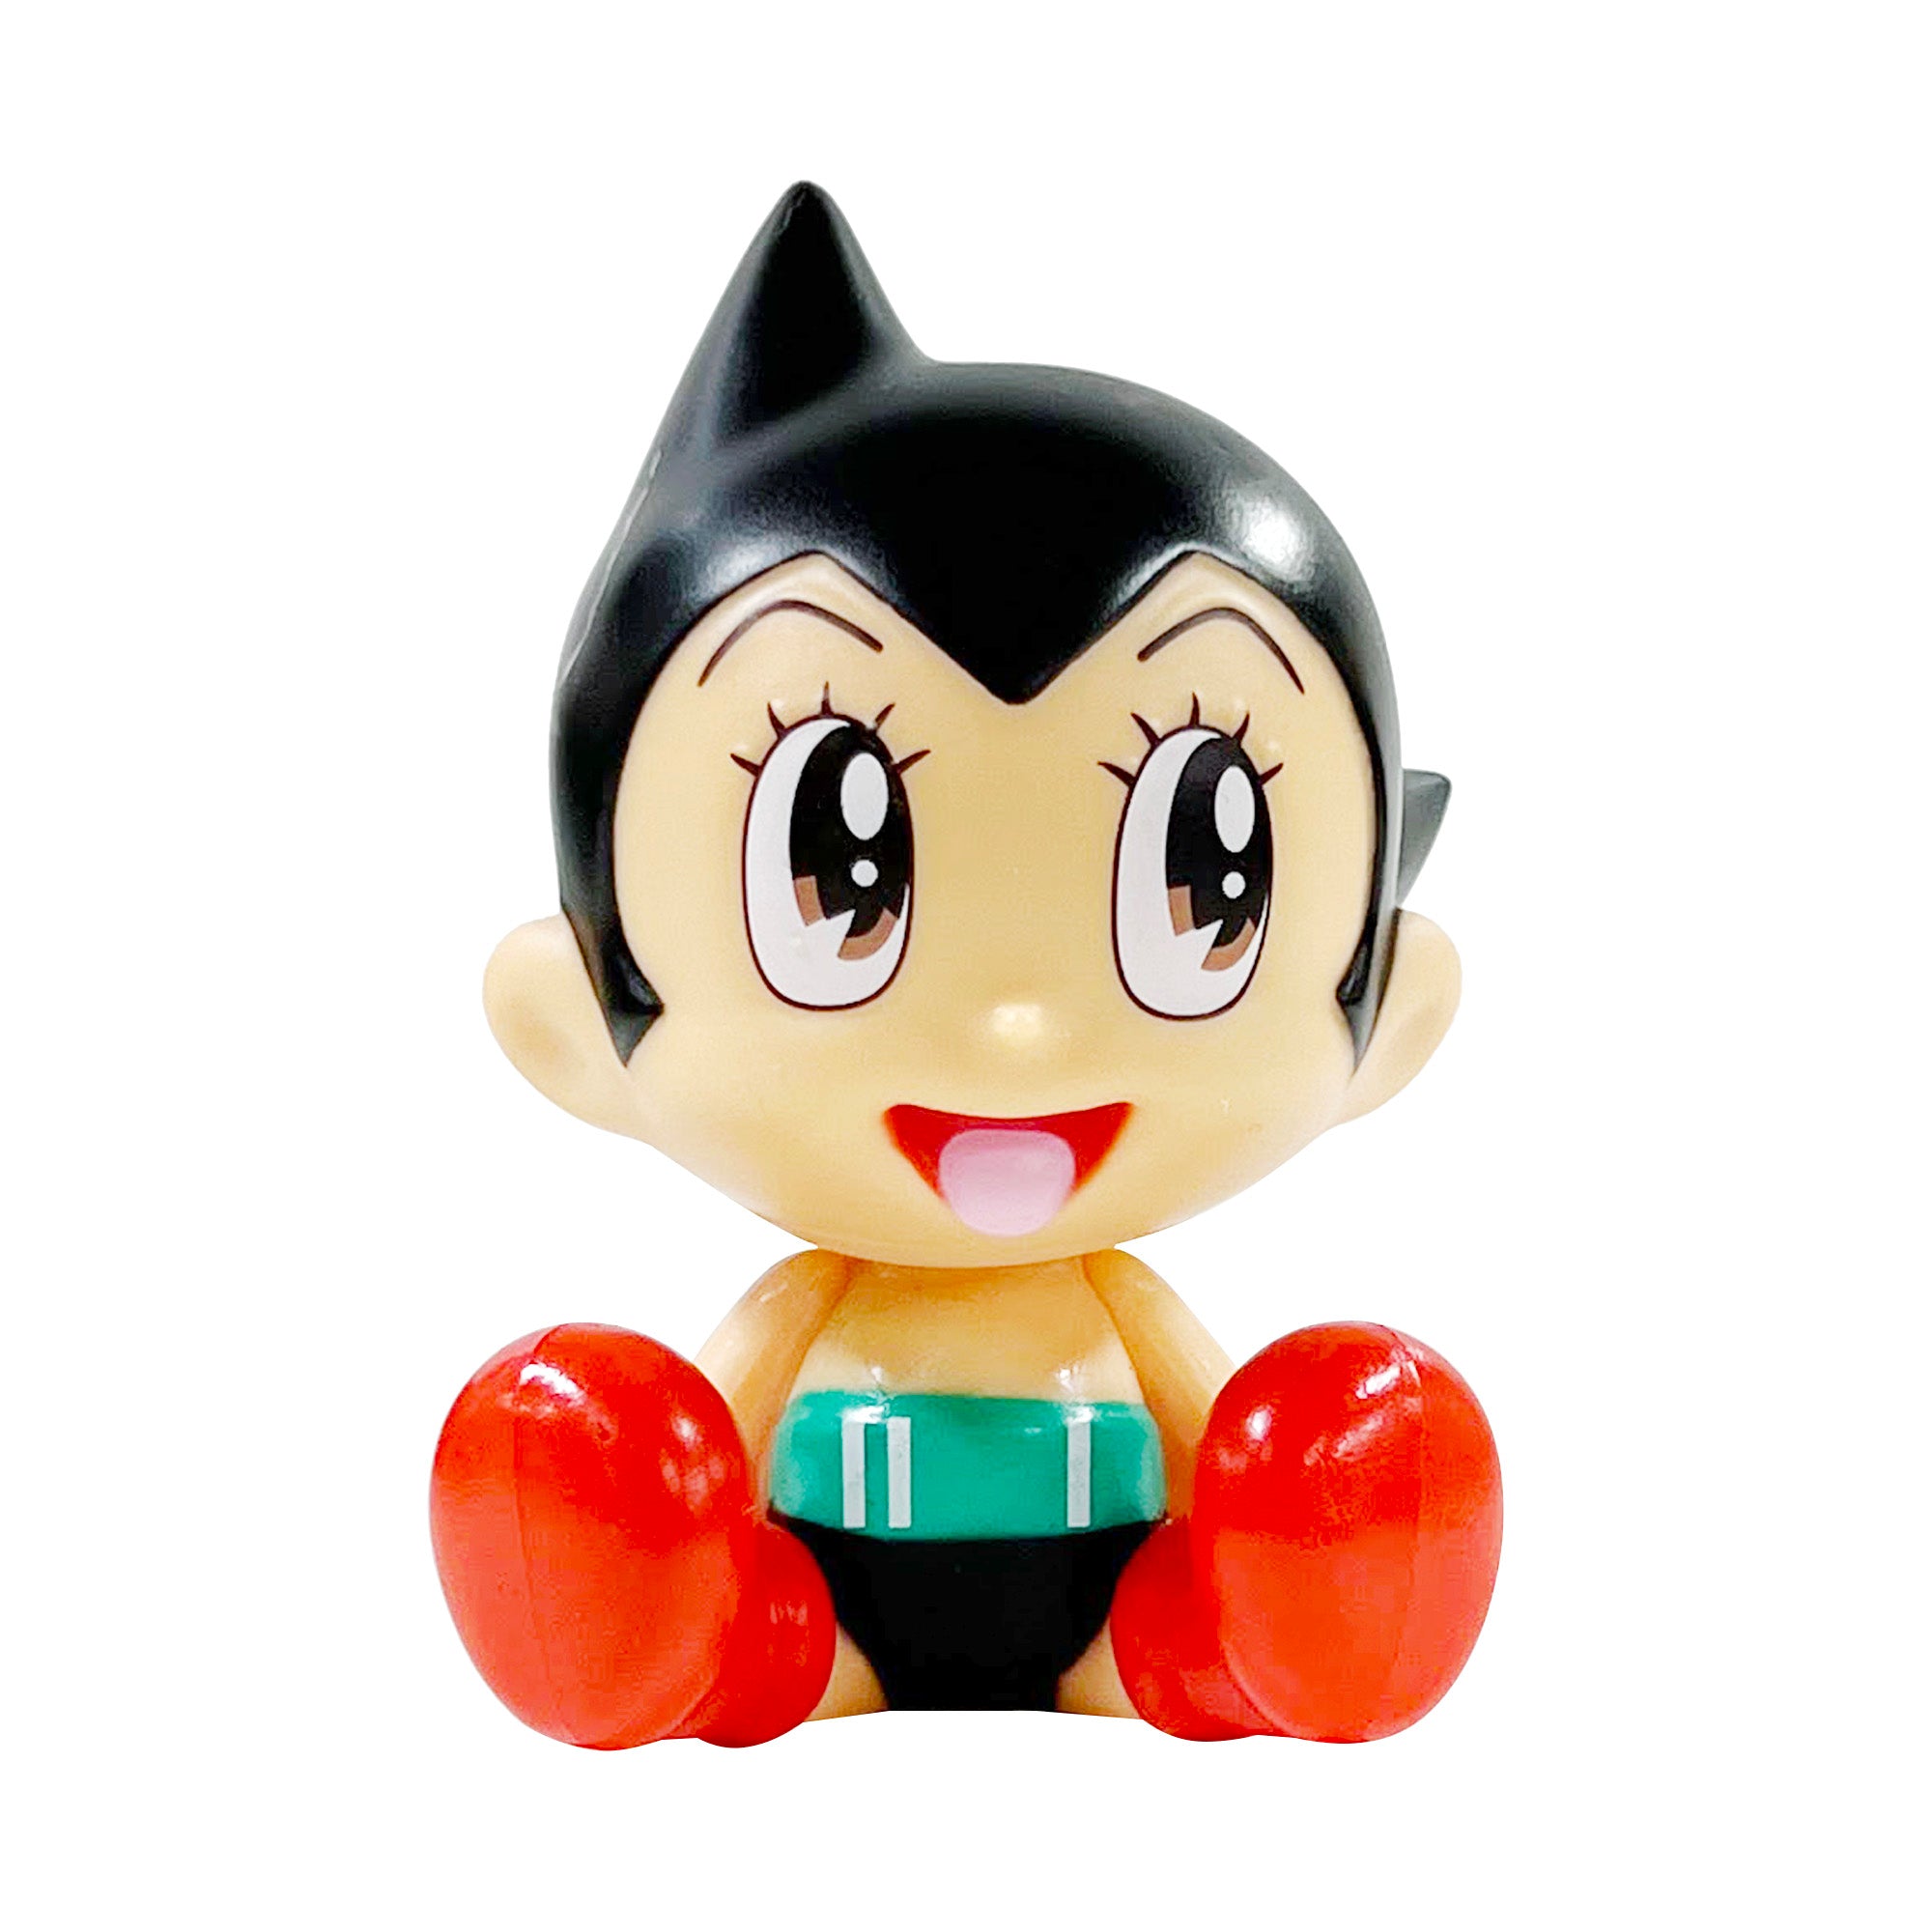 Astro Boy and Friends: Big Heads - Astro Boy 4